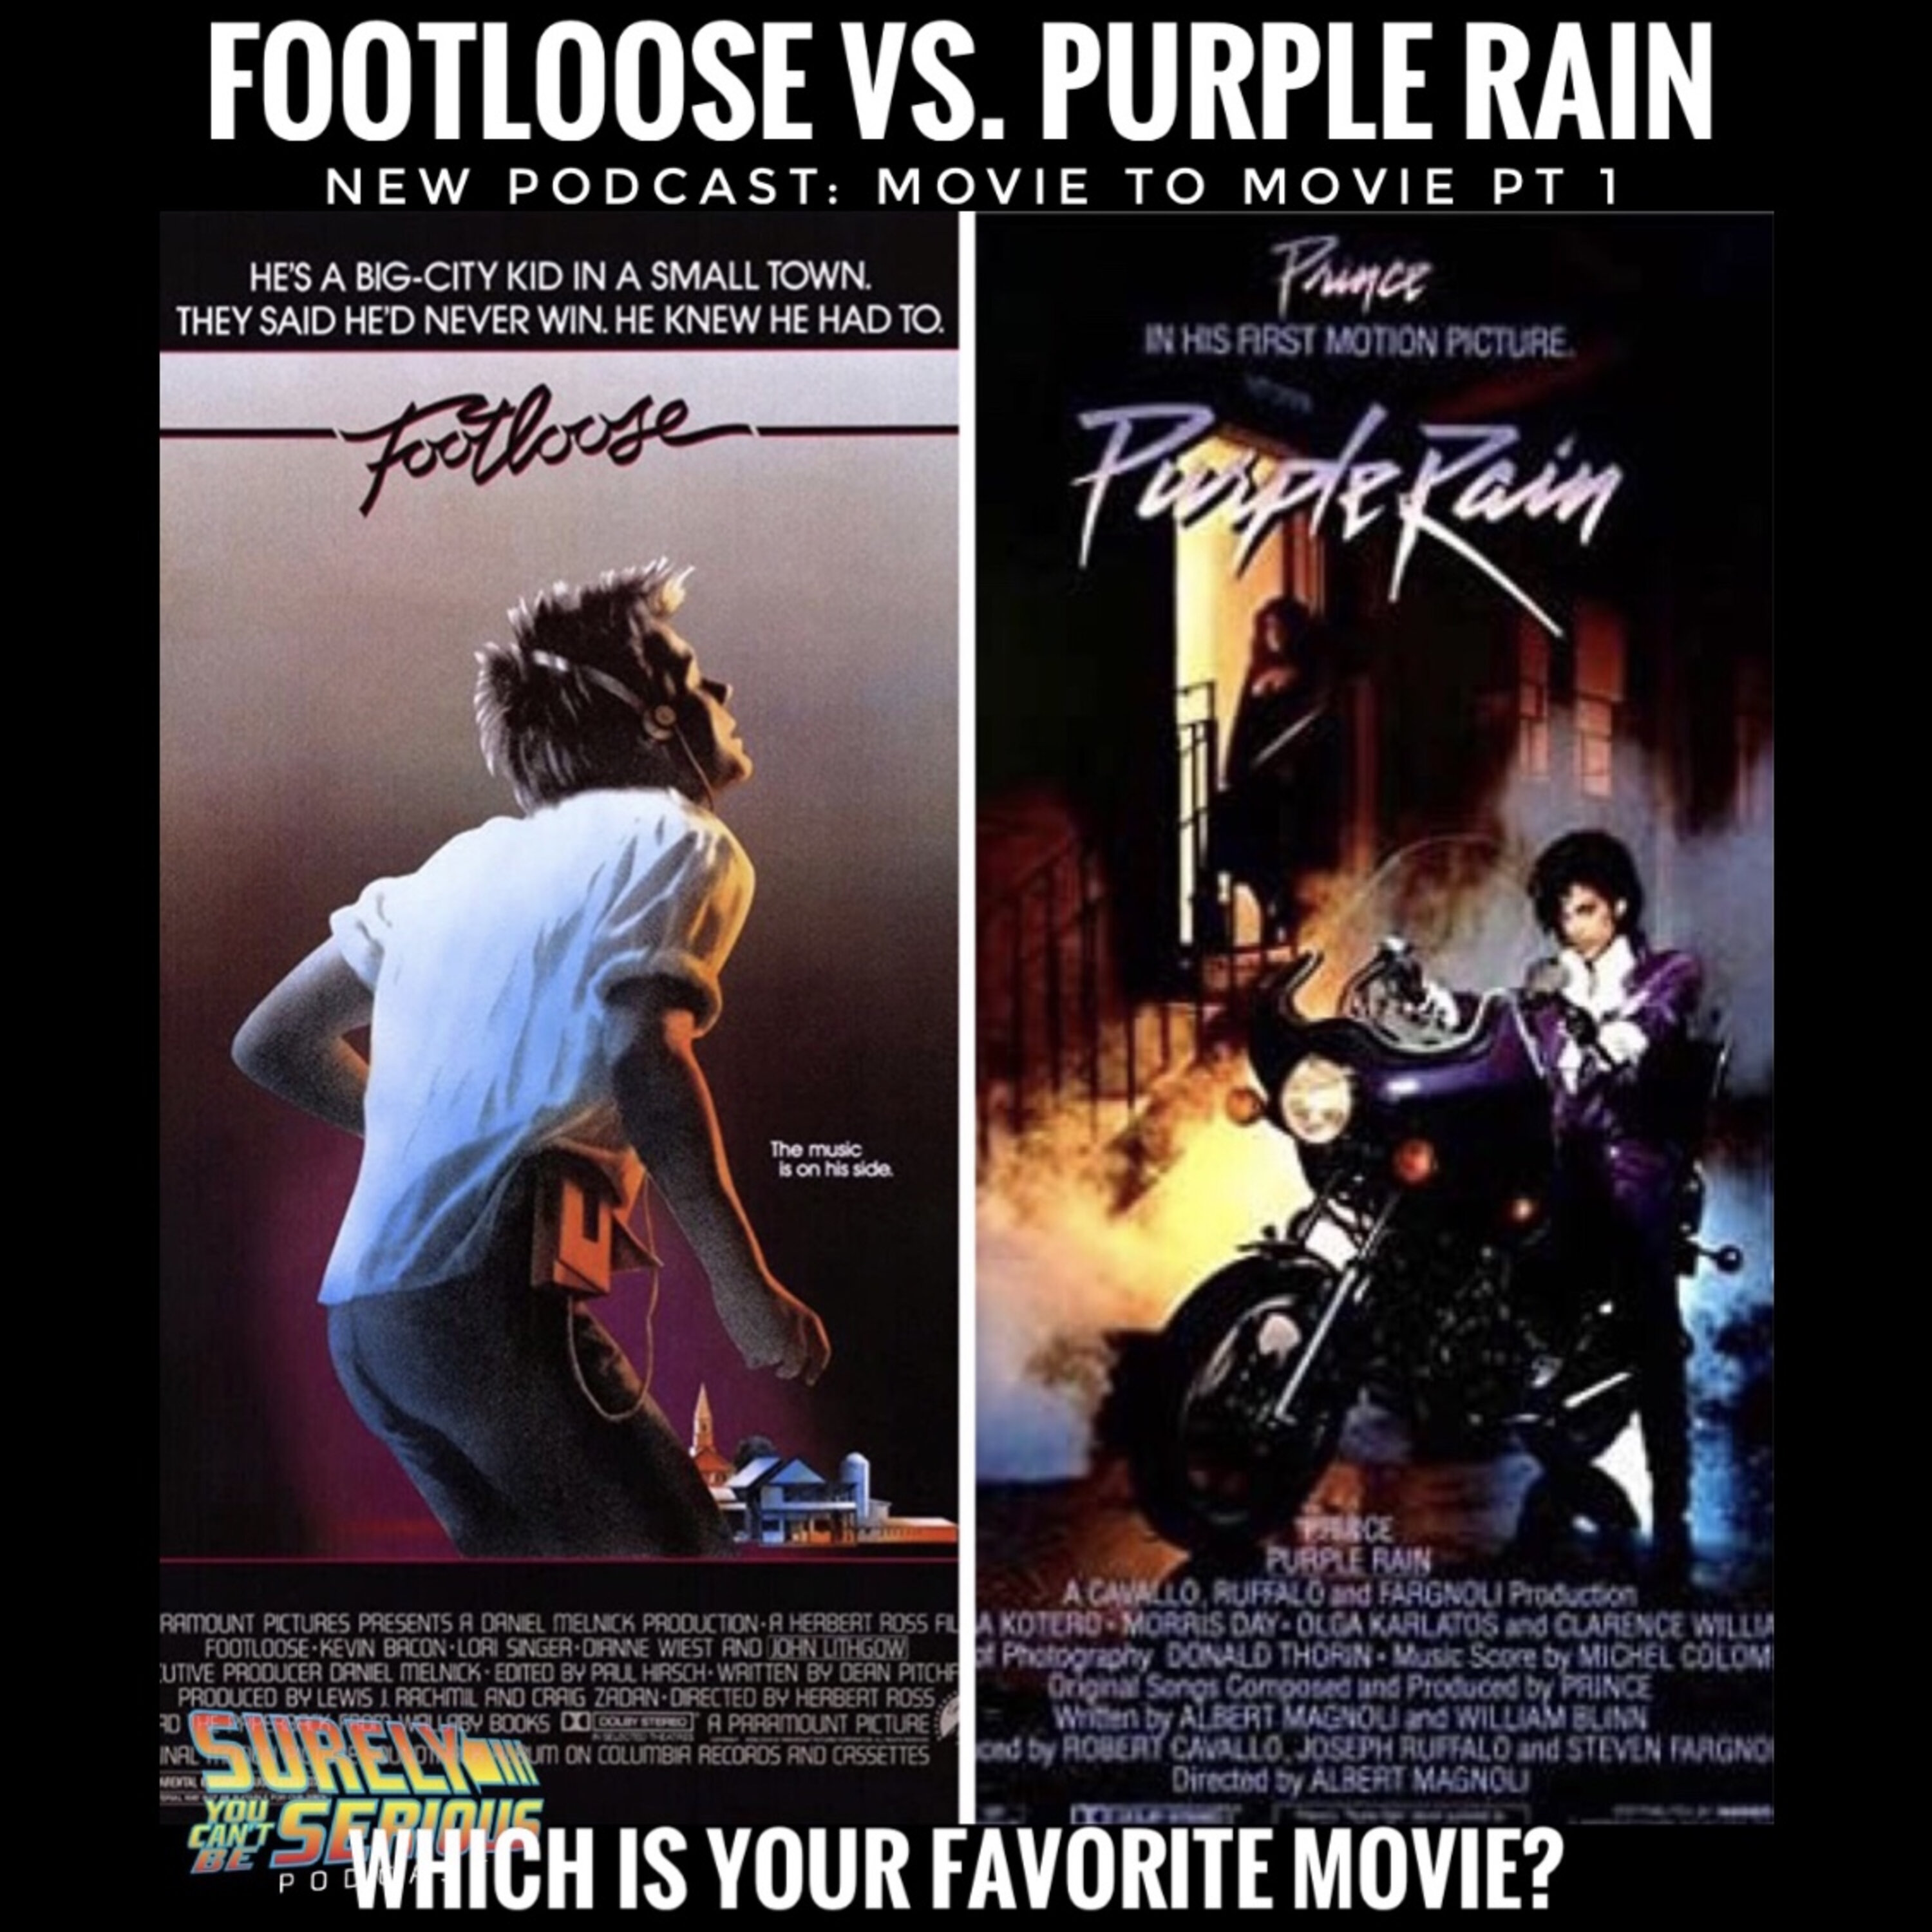 Footloose (1984) vs. Purple Rain (1984)" Movie to Movie Pt 1 Image